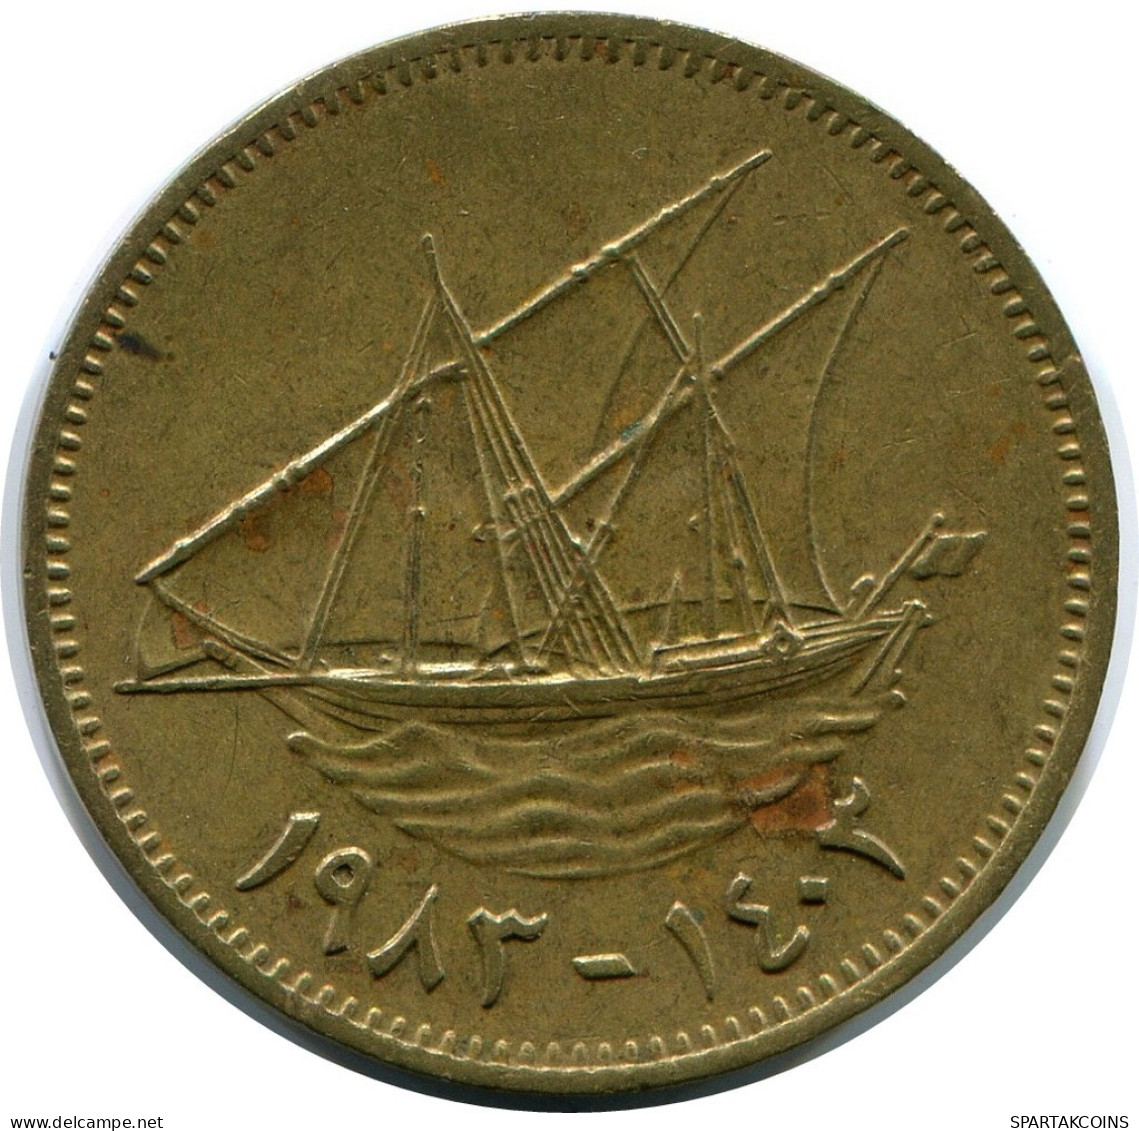 10 FILS 1984 KUWAIT Coin #AR012.U.A - Kuwait